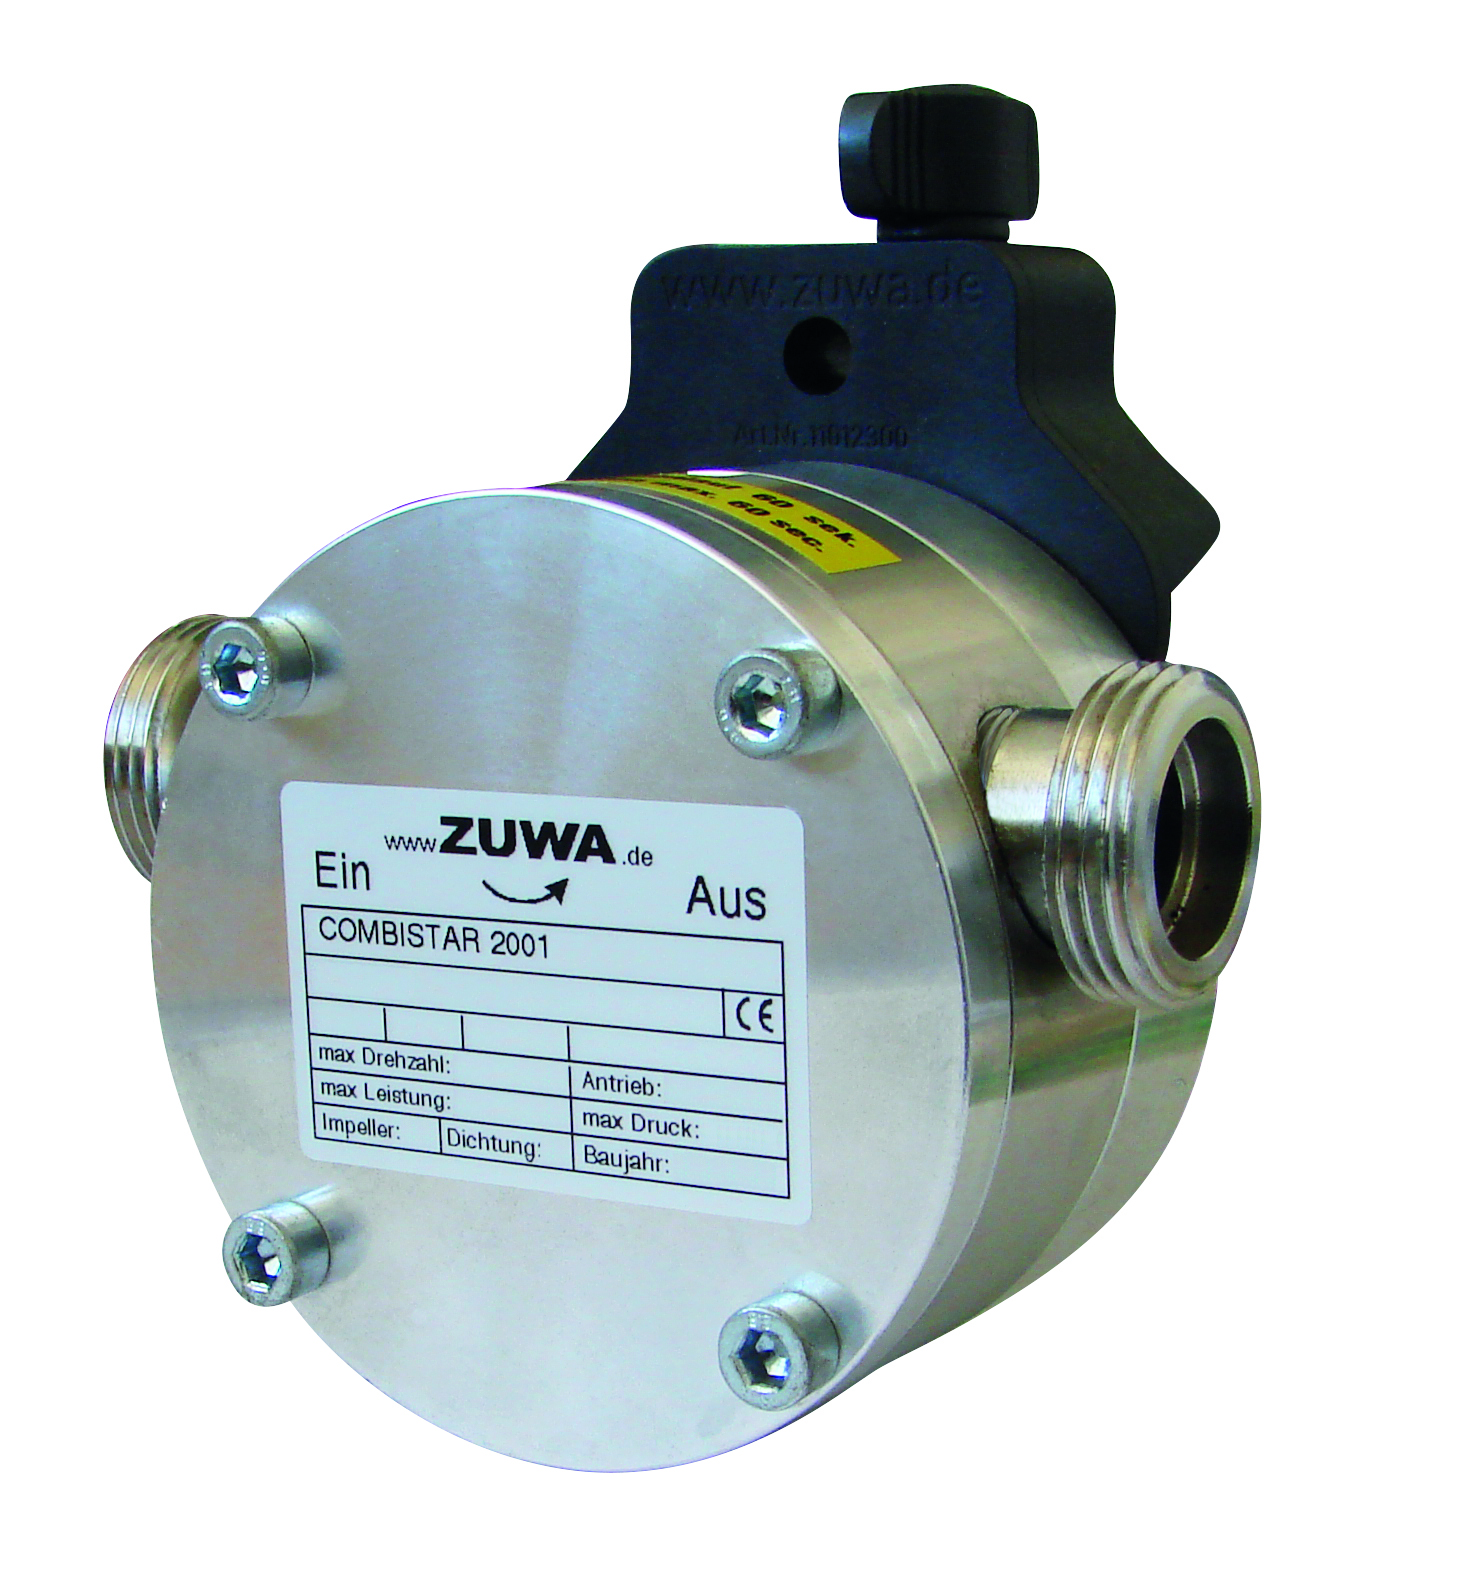 Zuwa Impellerpumpe COMBISTAR/V 2001-A, 30 l/min, Bohrmaschinenpumpe - 121311300AB